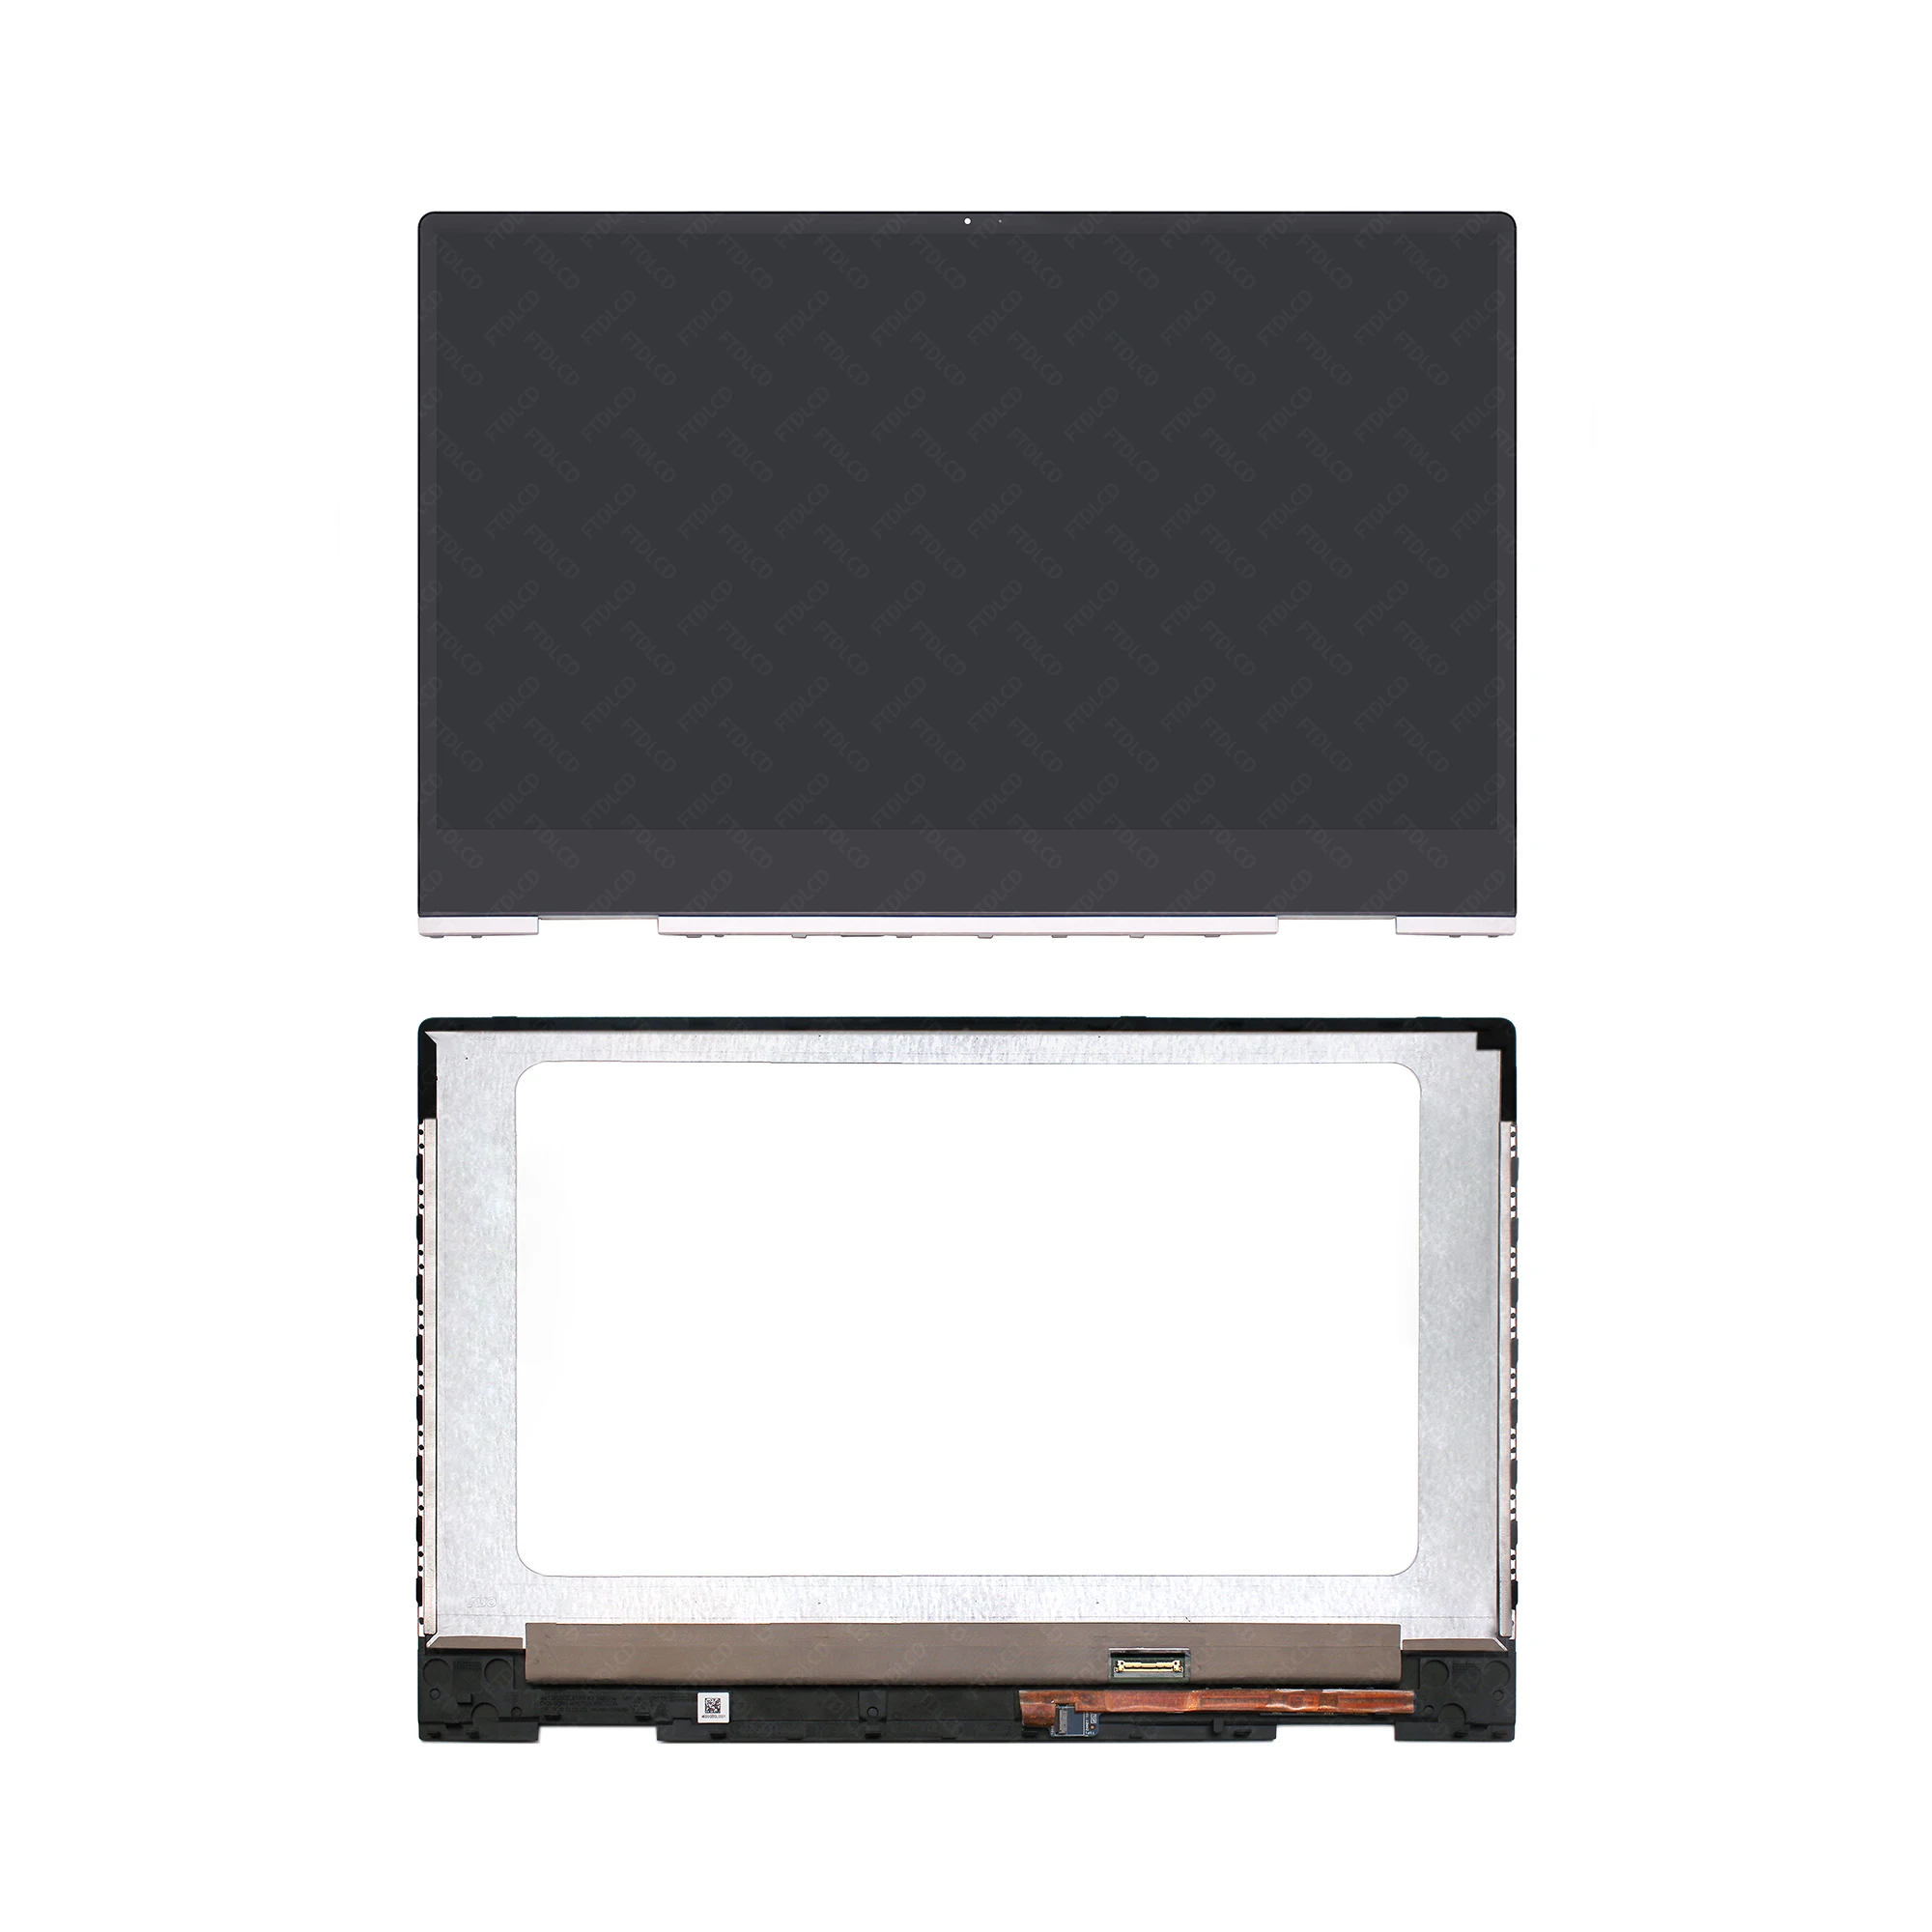 Купи FHD 1920X1080 15.6'' LCD Display Touch Screen Digitizer Assembly For HP Envy X360 Convertible 15-dr 15m-dr Series L53868-001 за 6,719 рублей в магазине AliExpress